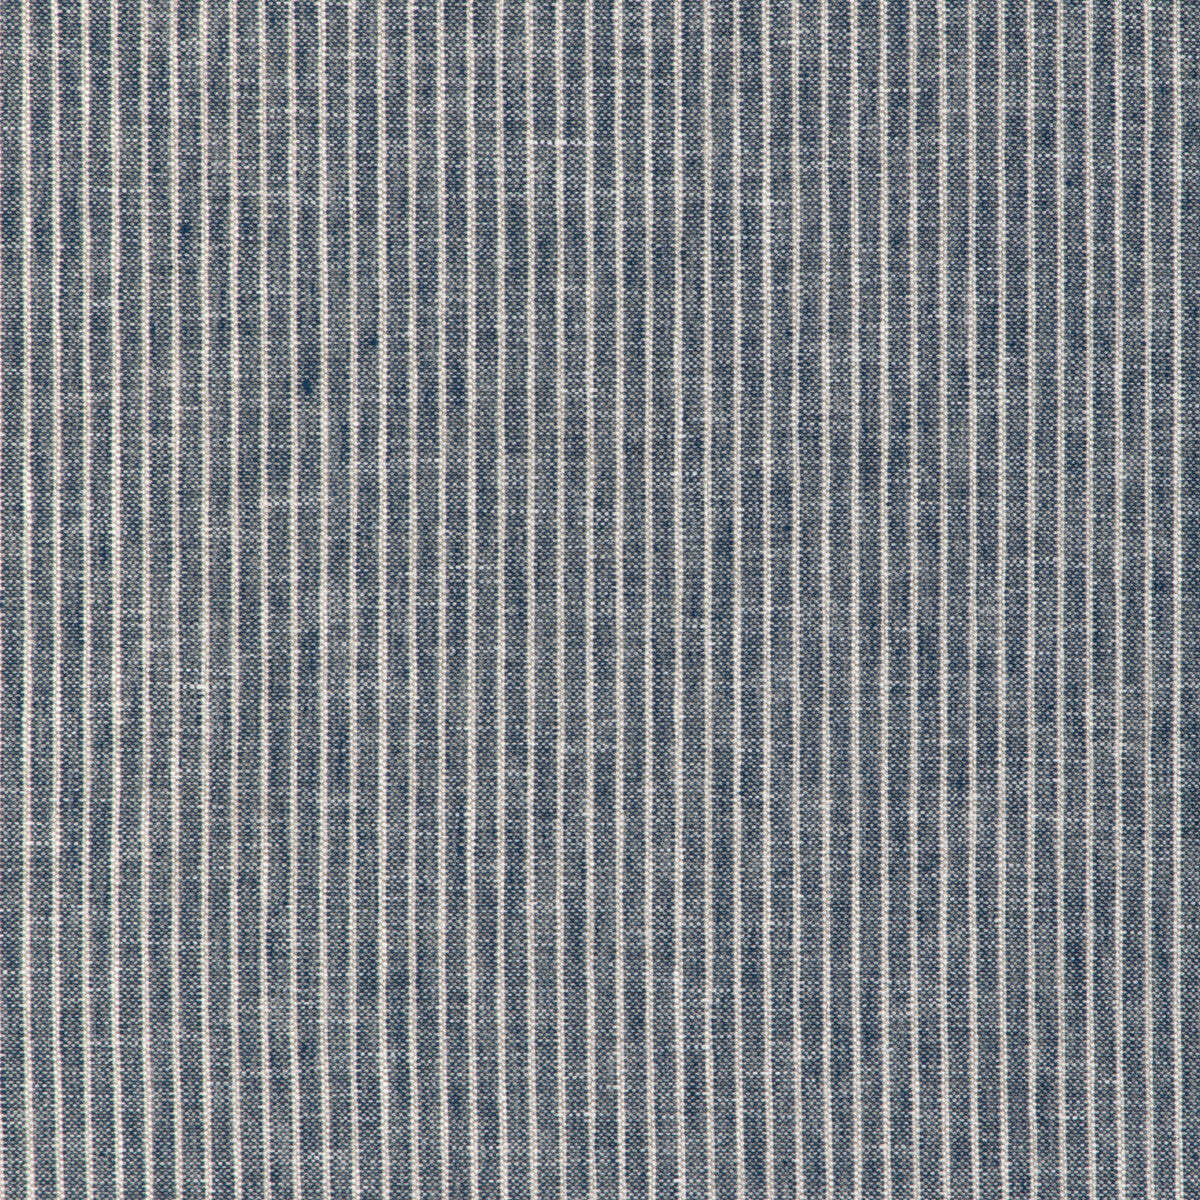 Kravet Smart fabric in 36655-51 color - pattern 36655.51.0 - by Kravet Smart in the Performance Kravetarmor collection